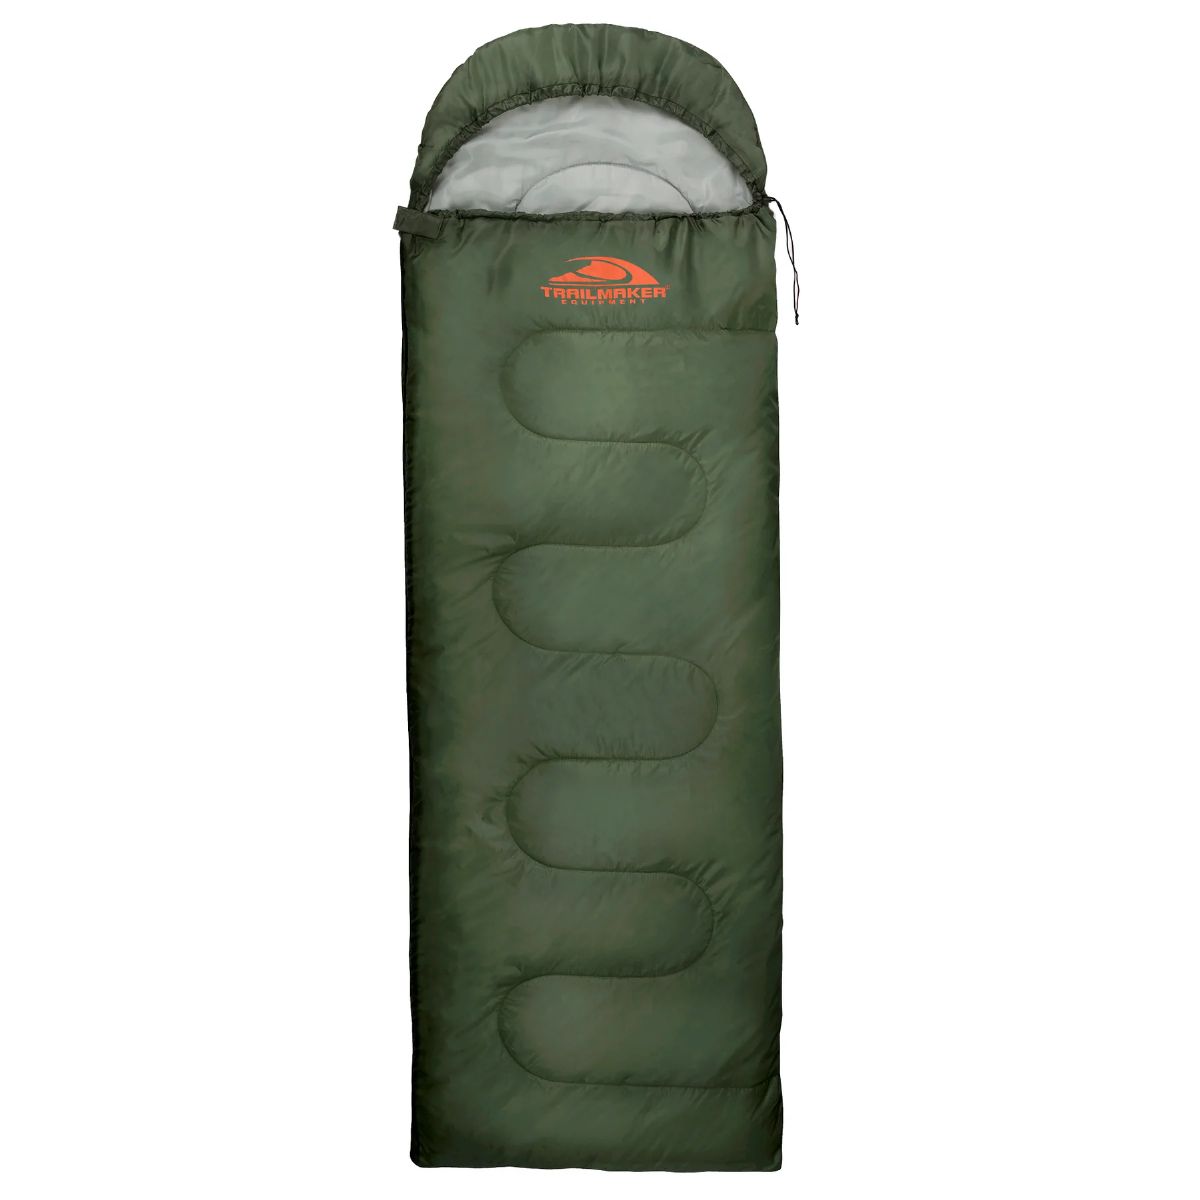 10 Wholesale Waterproof Cold Weather Sleeping Bags - 30f Green